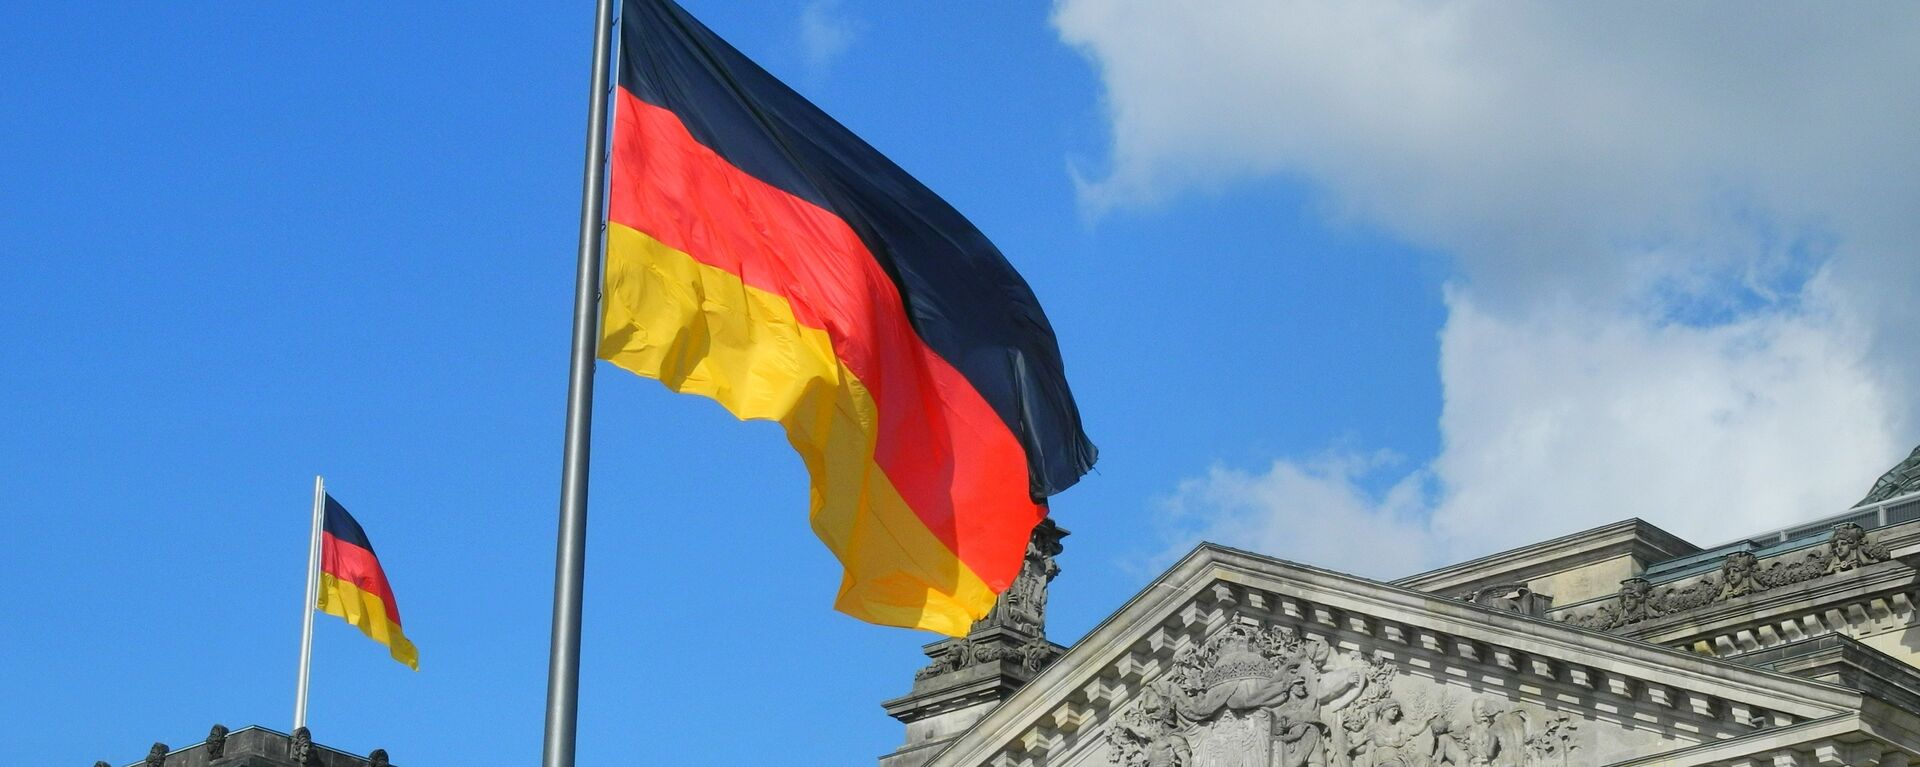 Bandera de Alemania - Sputnik Mundo, 1920, 27.09.2021